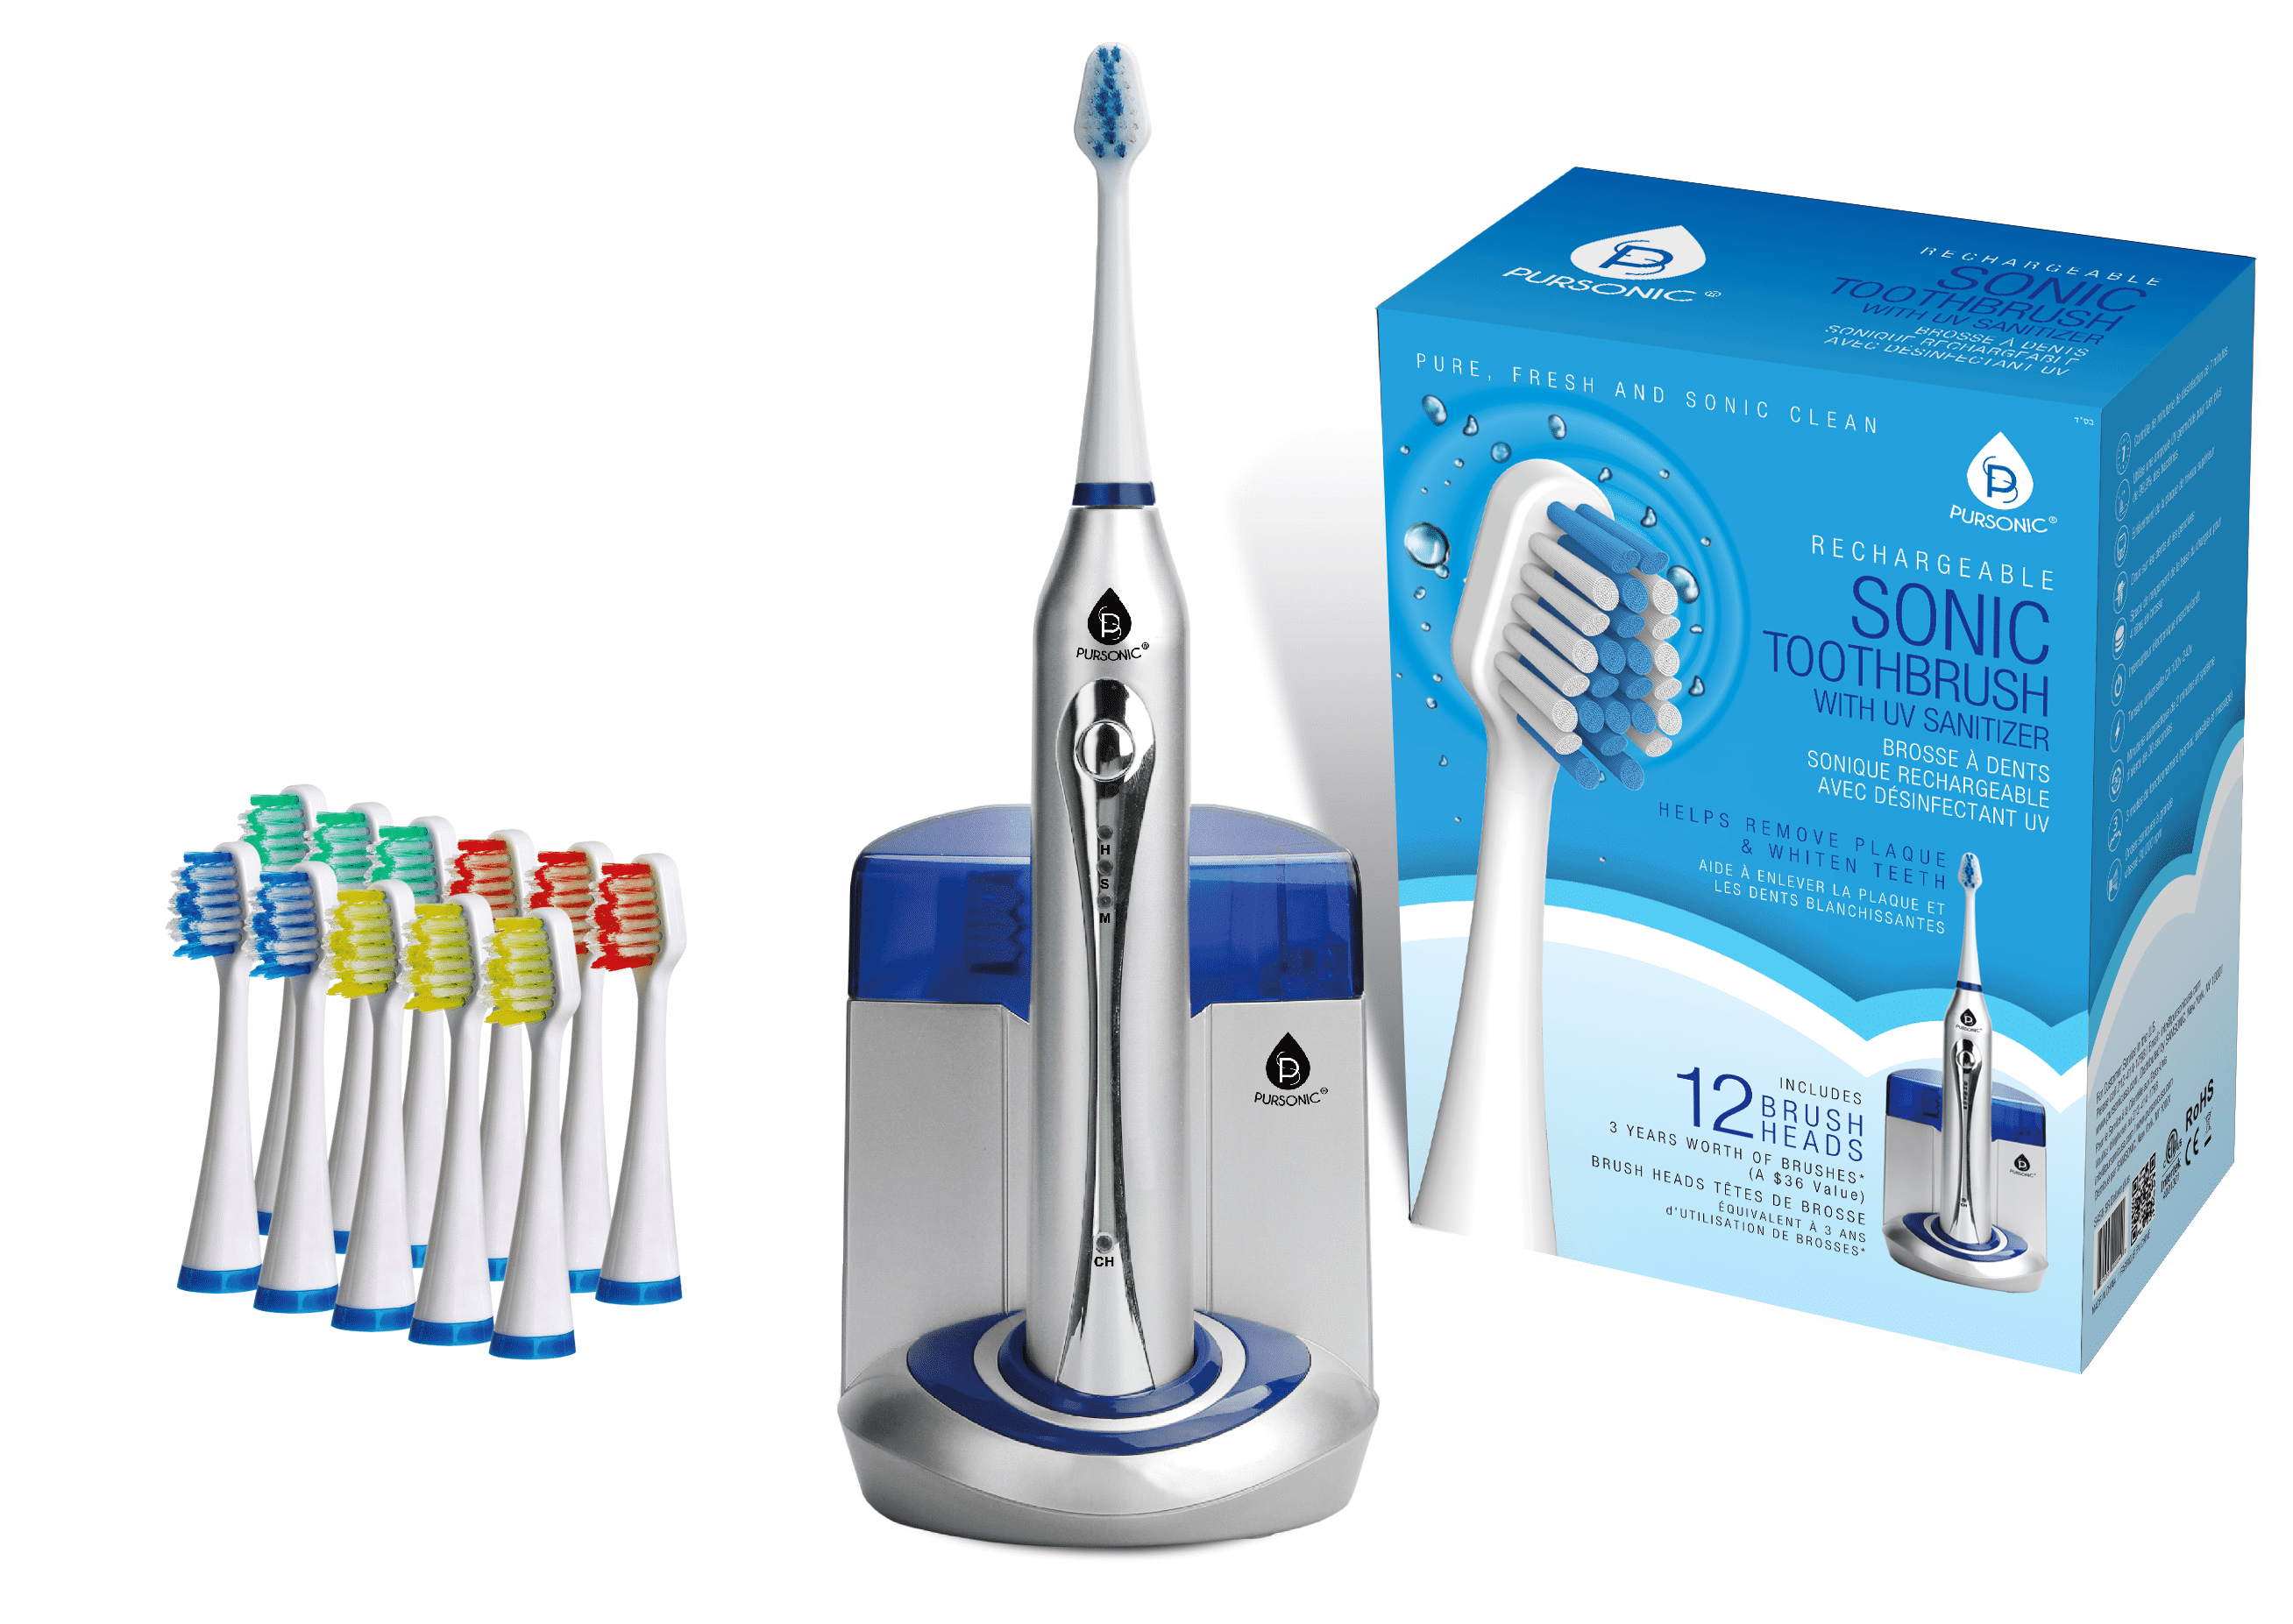 Sonic brush. Электрическая зубная щетка х-3 Sonic Toothbrush белая. Зубная щетка x3 Sonic Toothbrush. Зубная щетка Aquasonic насадки.